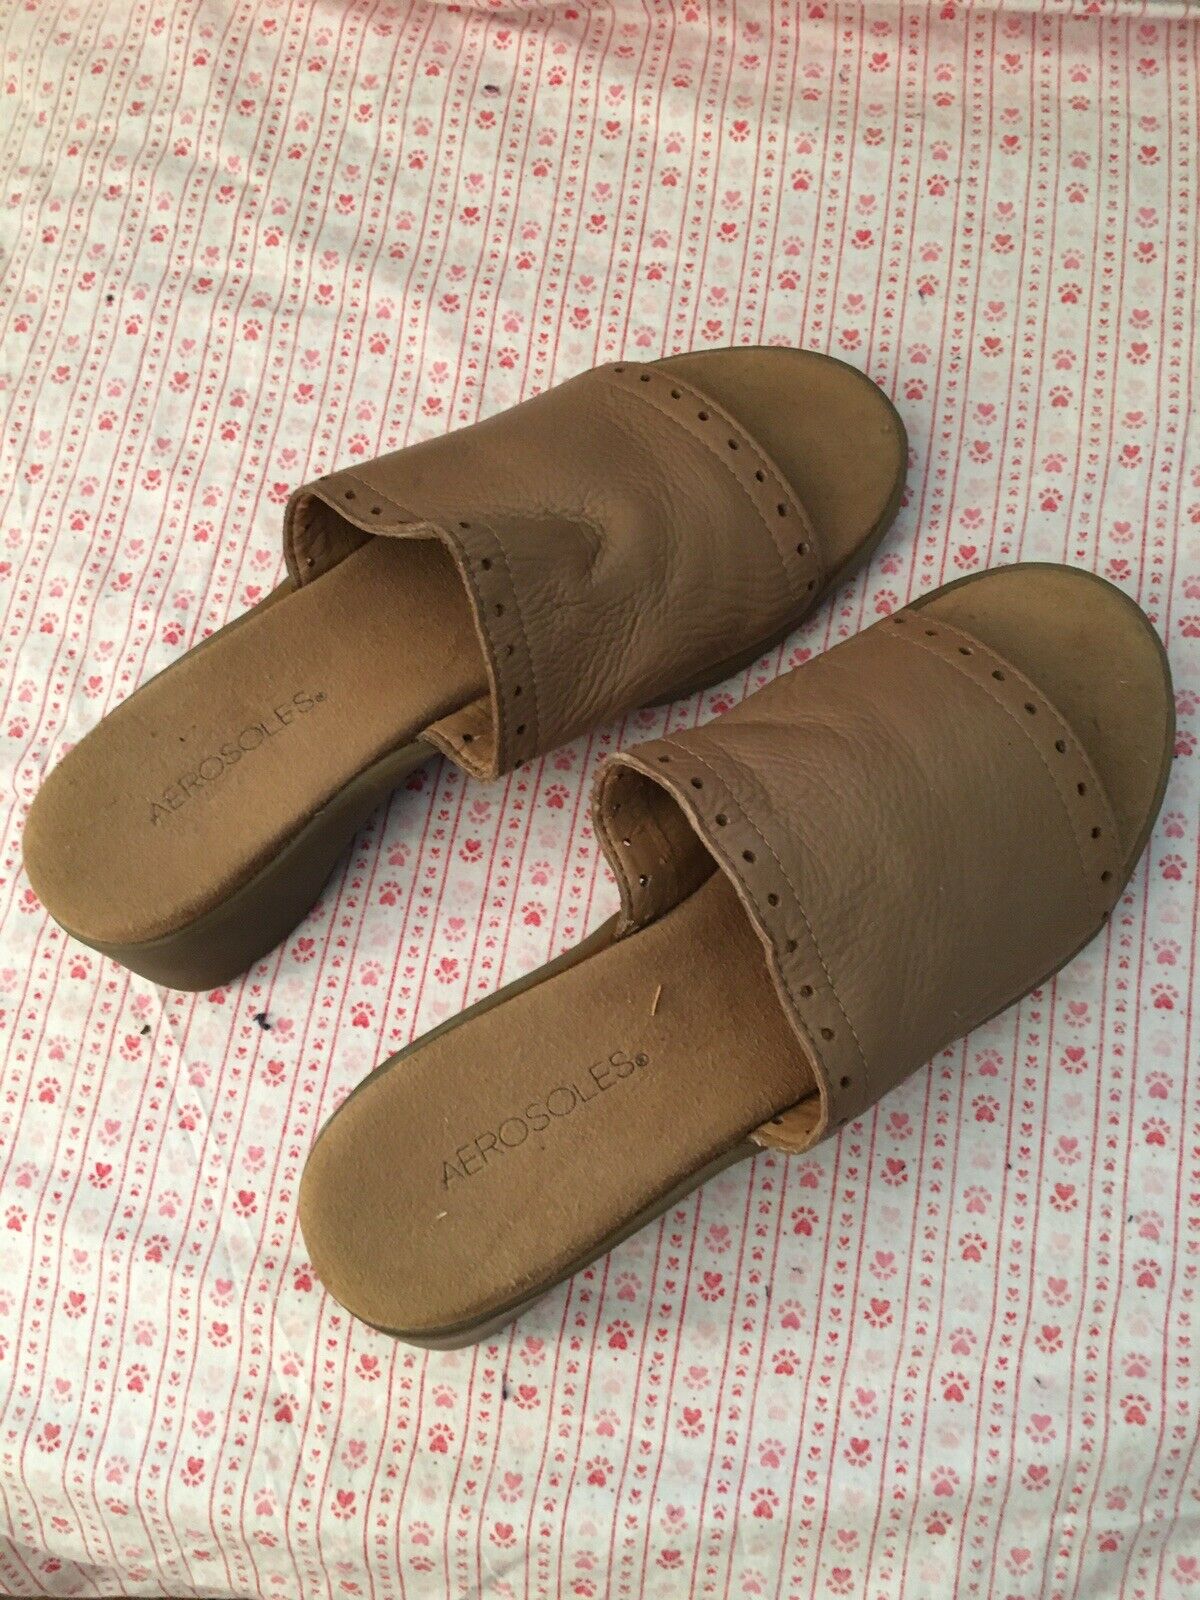 Aerosoles New Pair Women's Sandal Style Slide Shoes Leather Upper Beige 10M